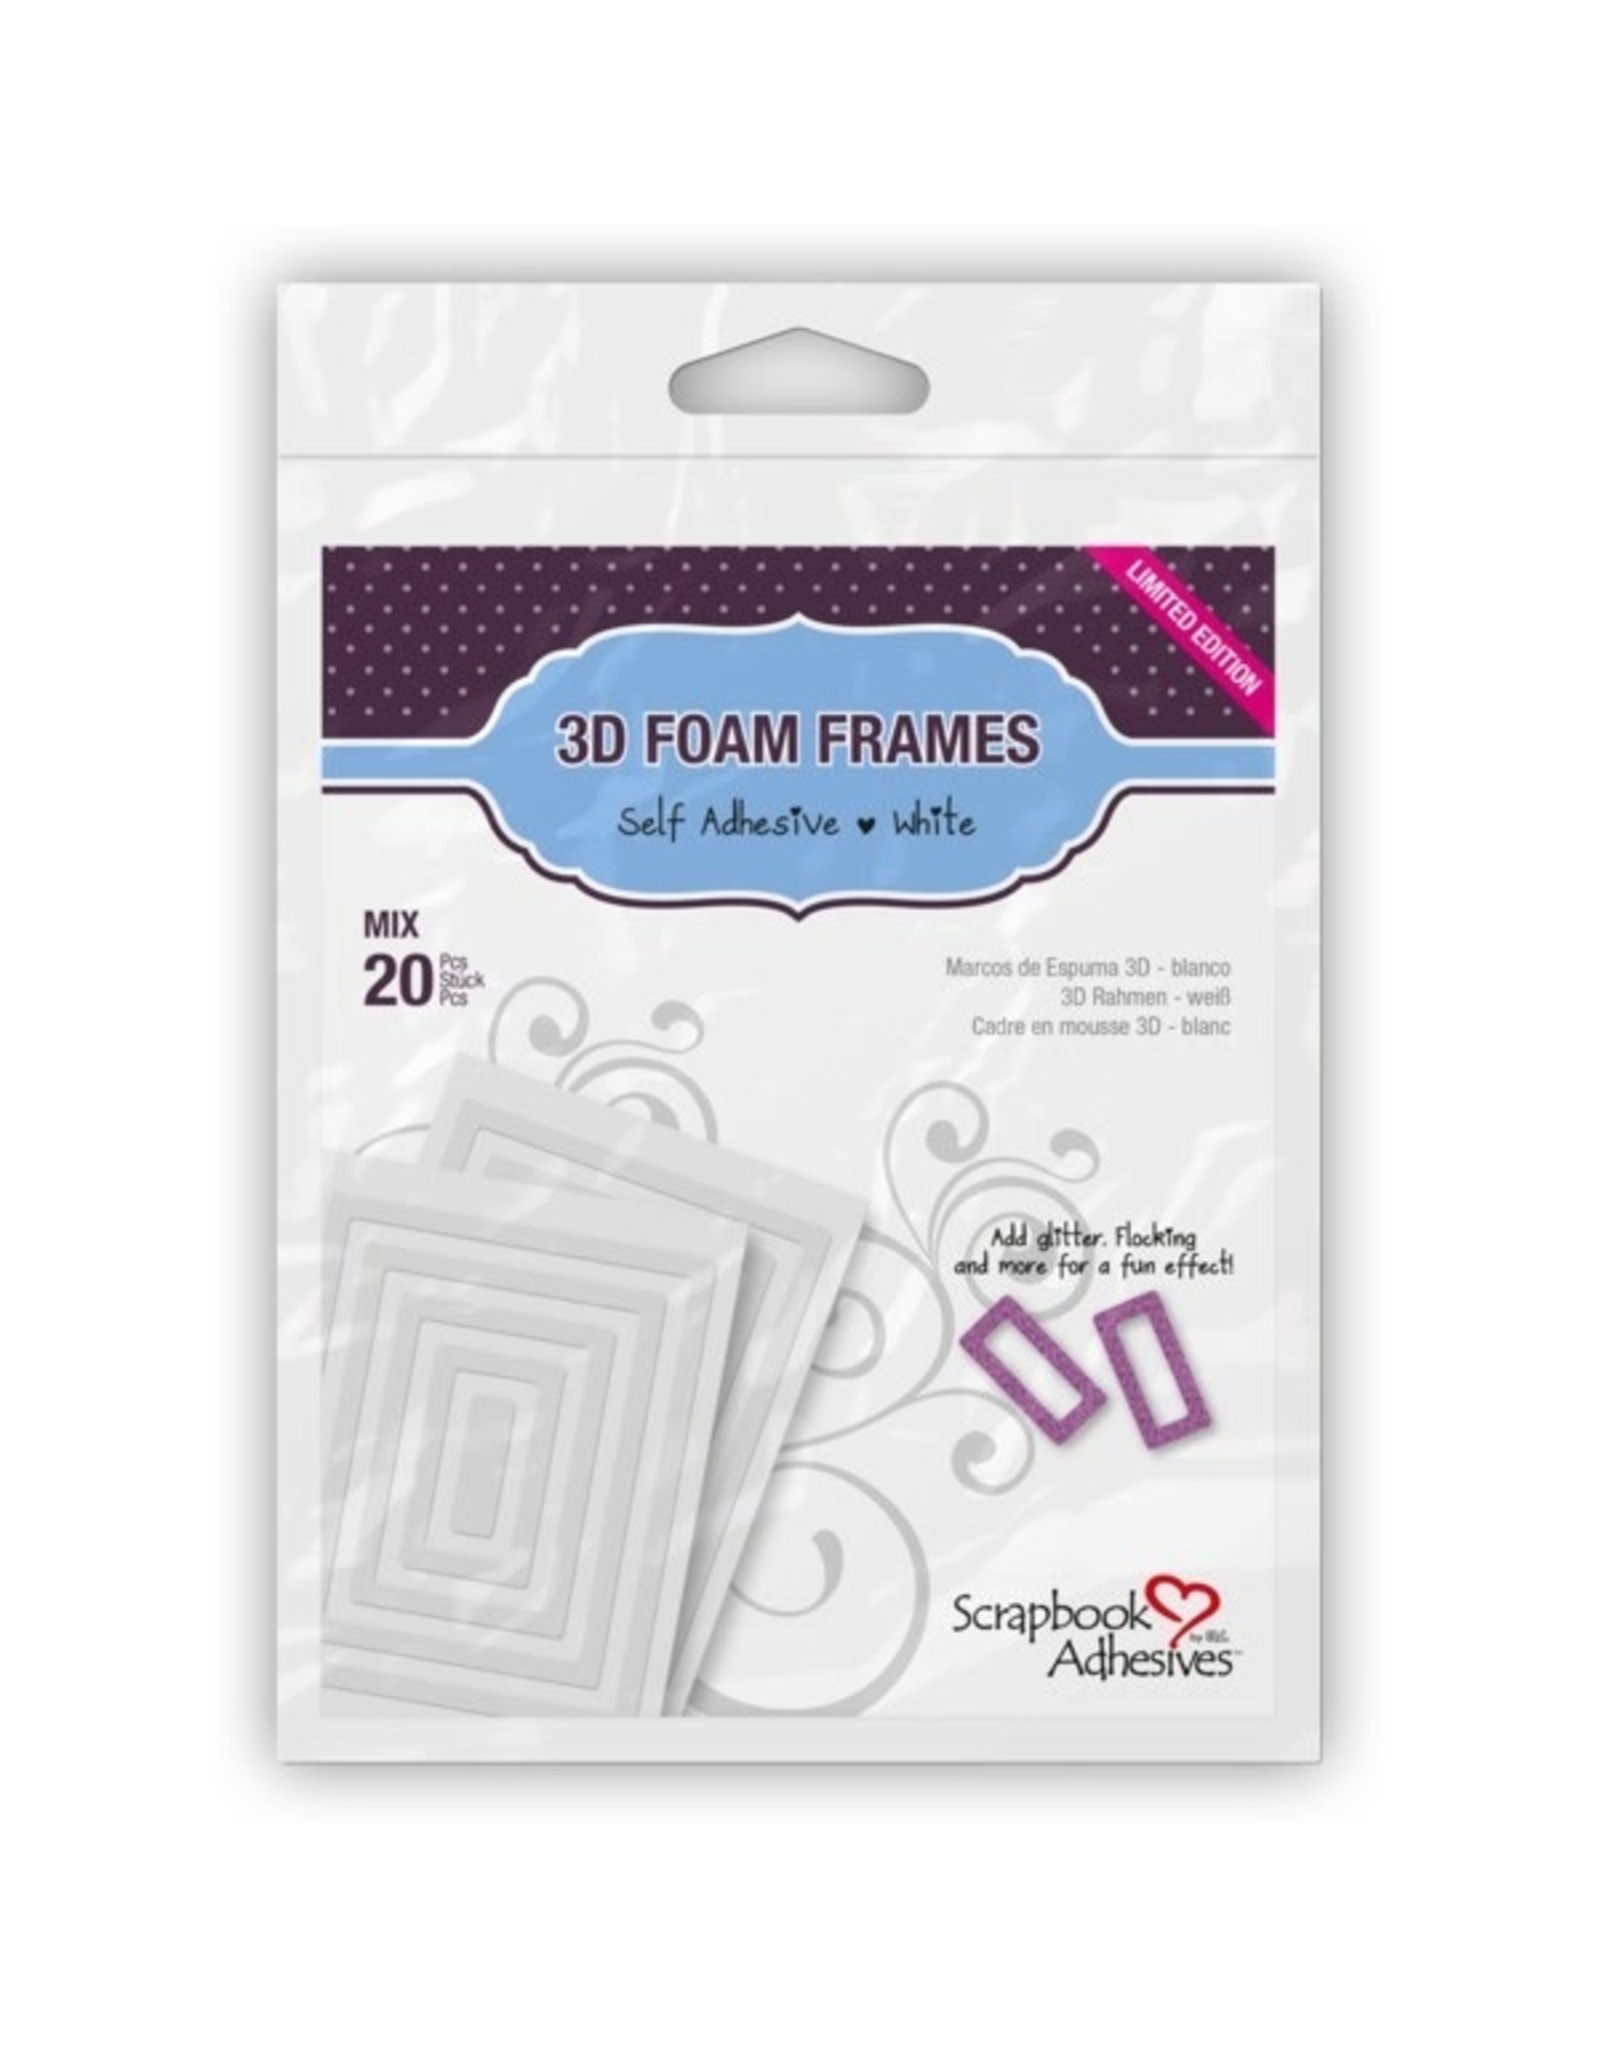 Scrapbook Adhesives 3D Foam Frames